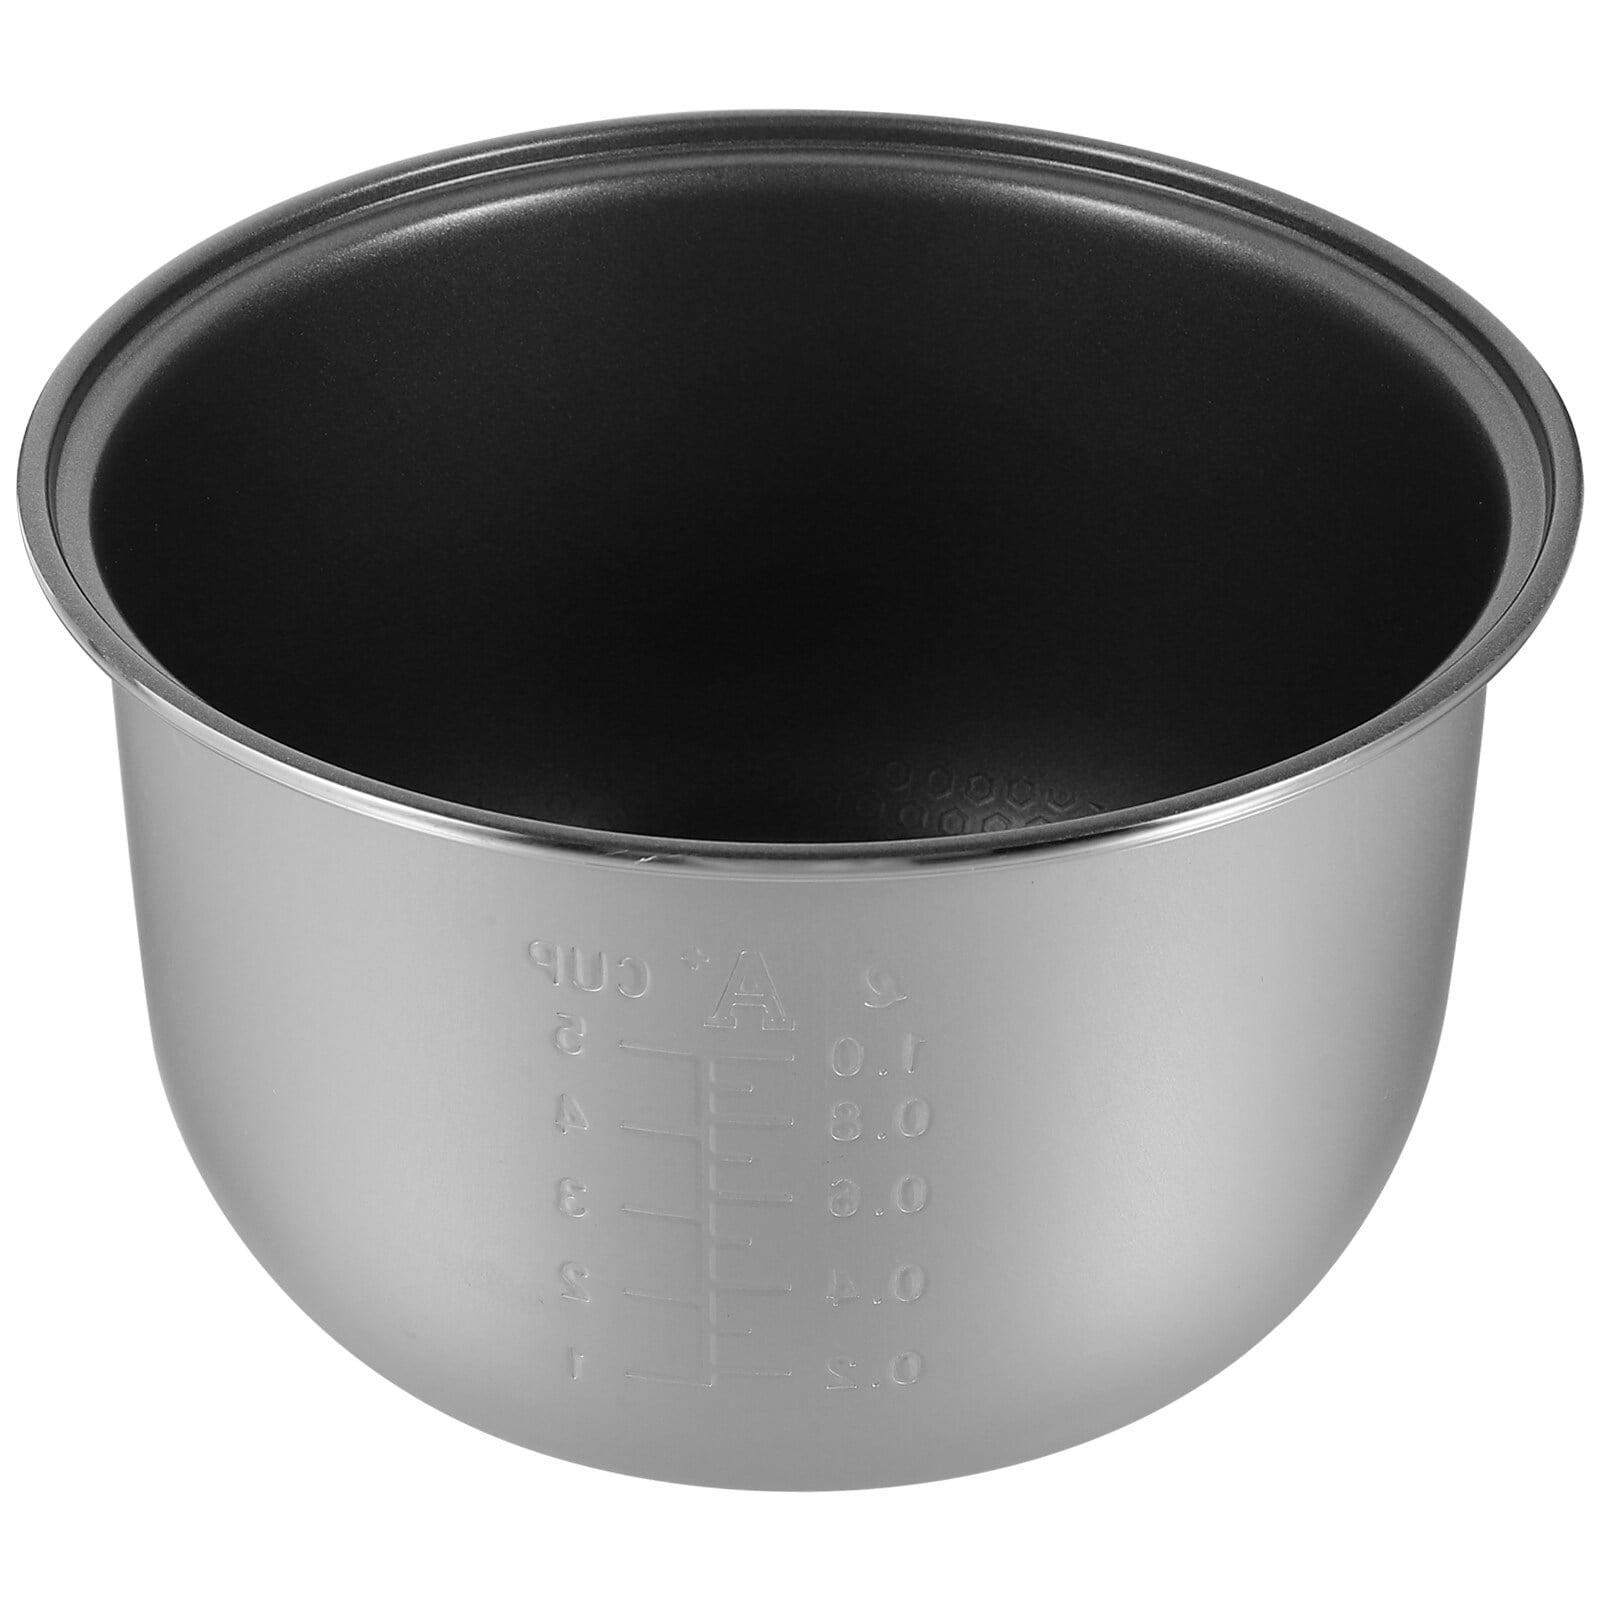  UPKOCH Inner Cooking Pot 3L Stainless Steel Pot for Rice Cooker  and Rice Cooker Liner Rice Cooking Container Rice Maker Accessories for Rice  Maker Cooker: Home & Kitchen